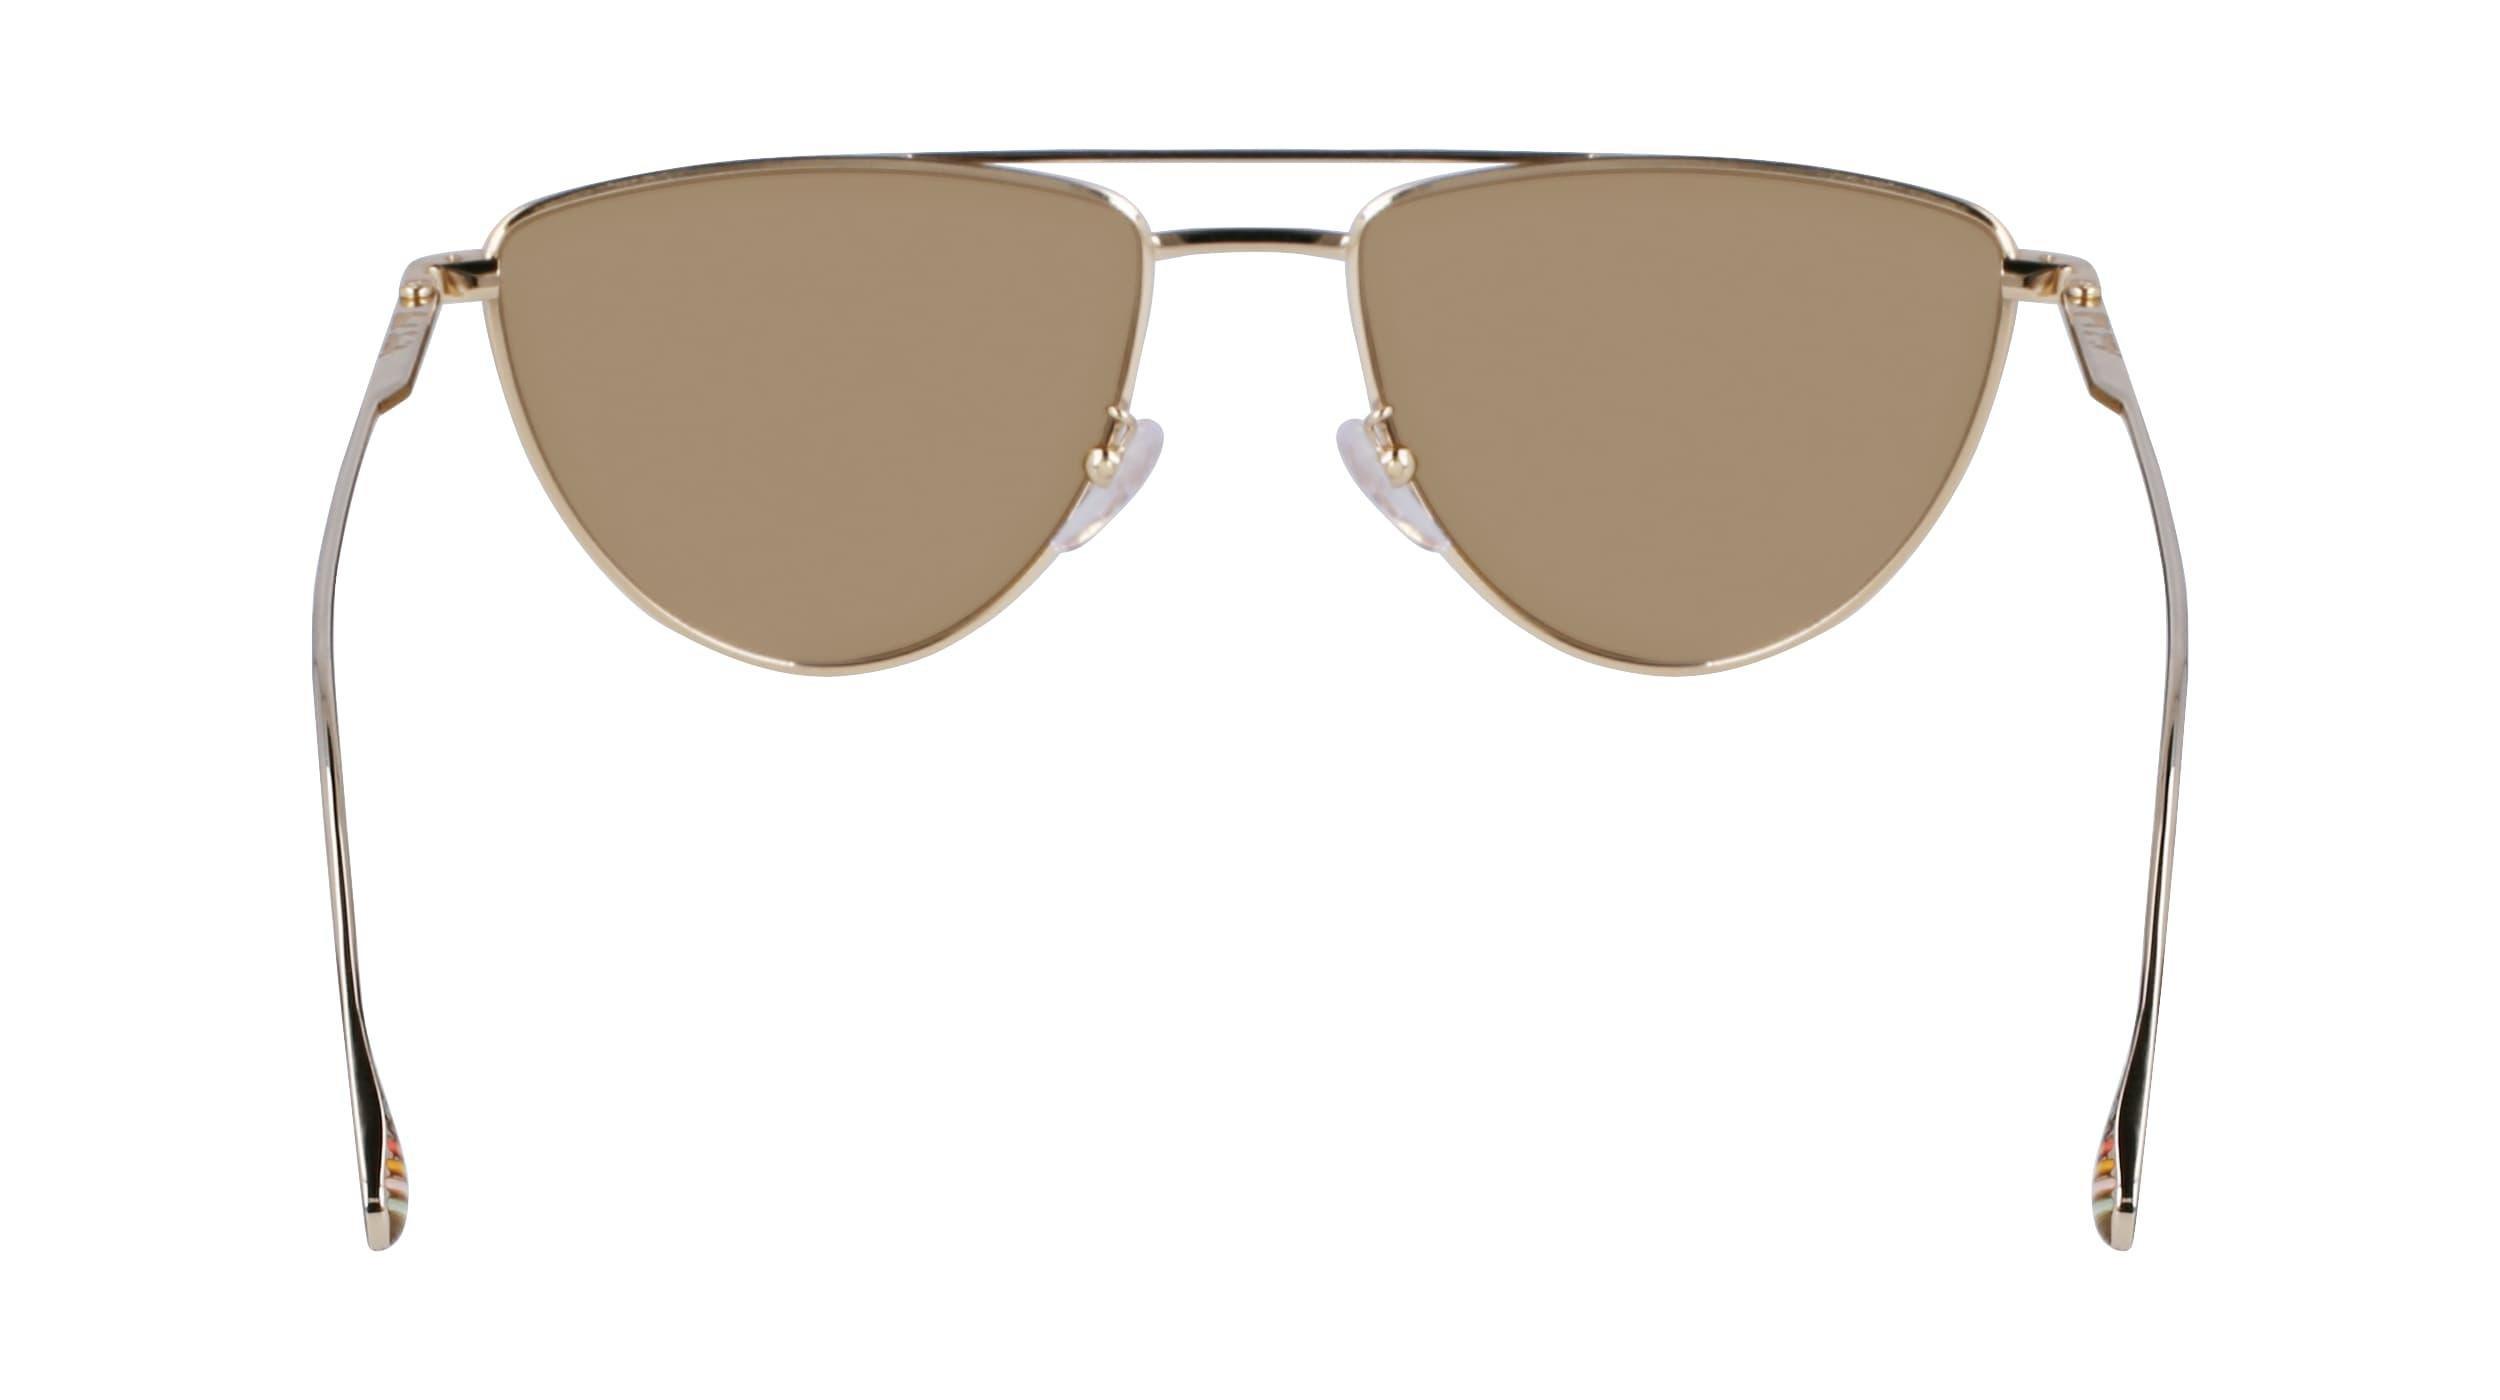 PAUL SMITH - Paul Smith Unisex Shiny Gold Aviator Sunglasses - Psle08856 Garner